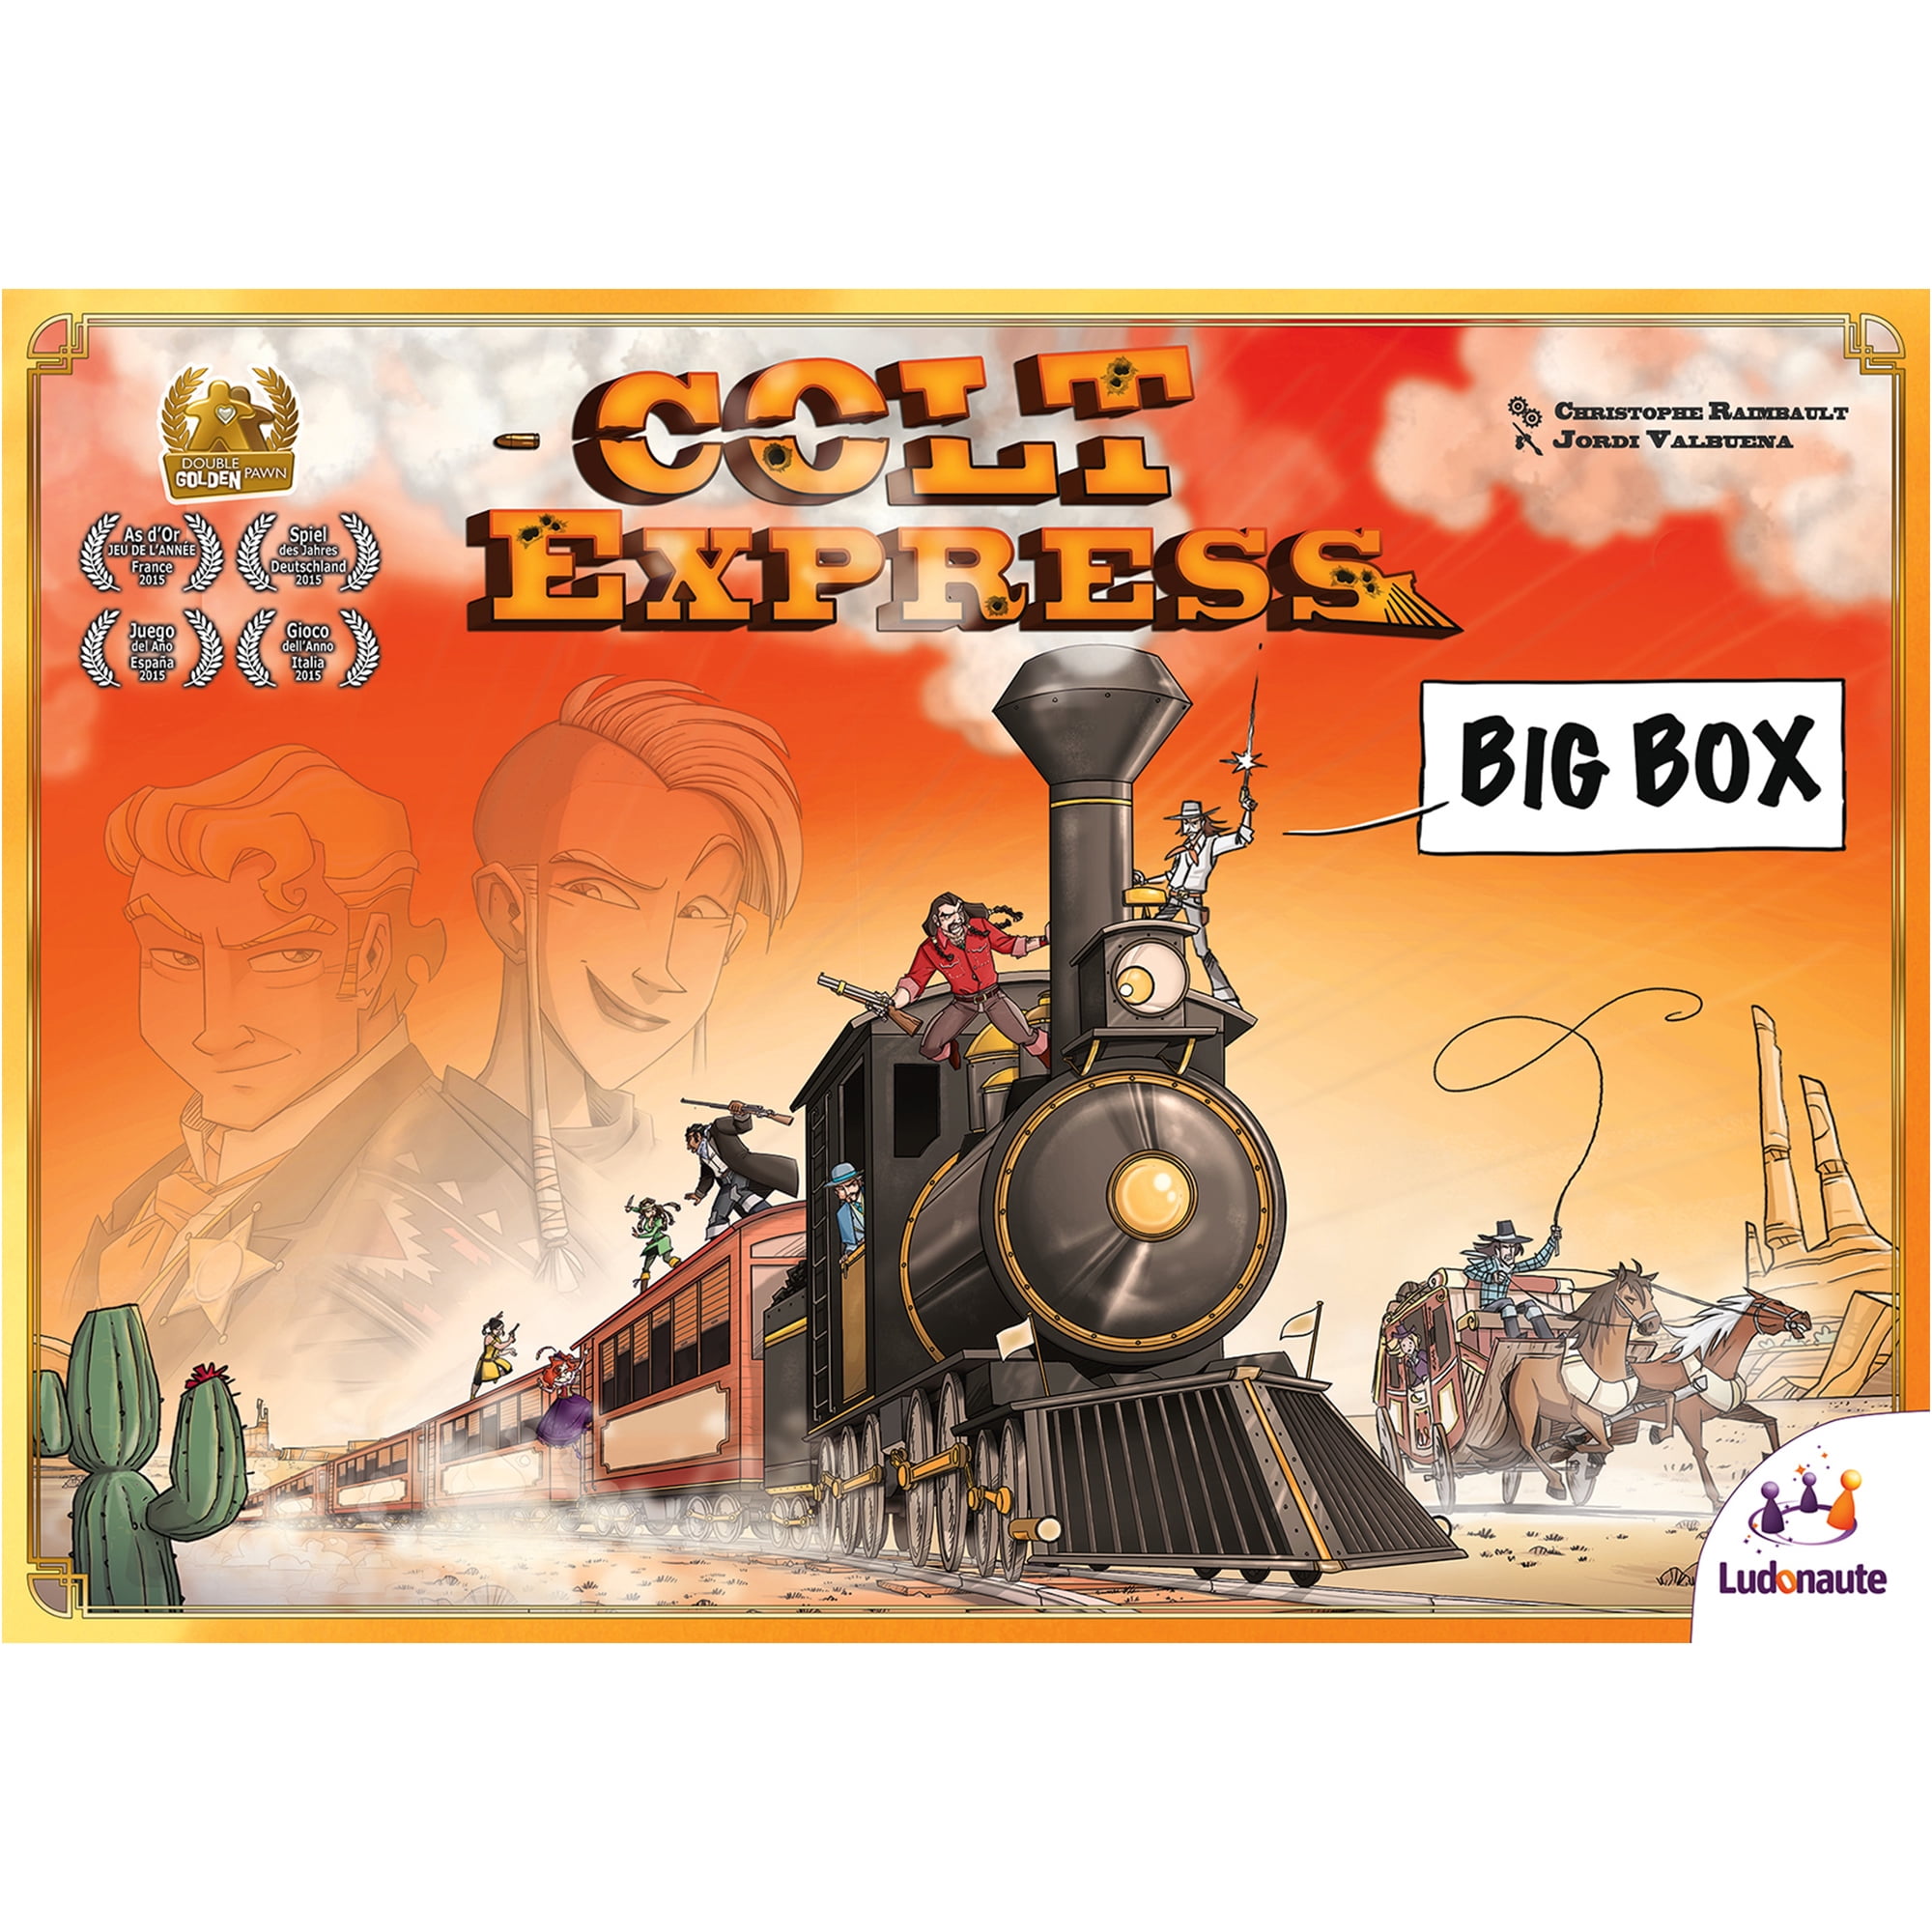 Colt express steam фото 9